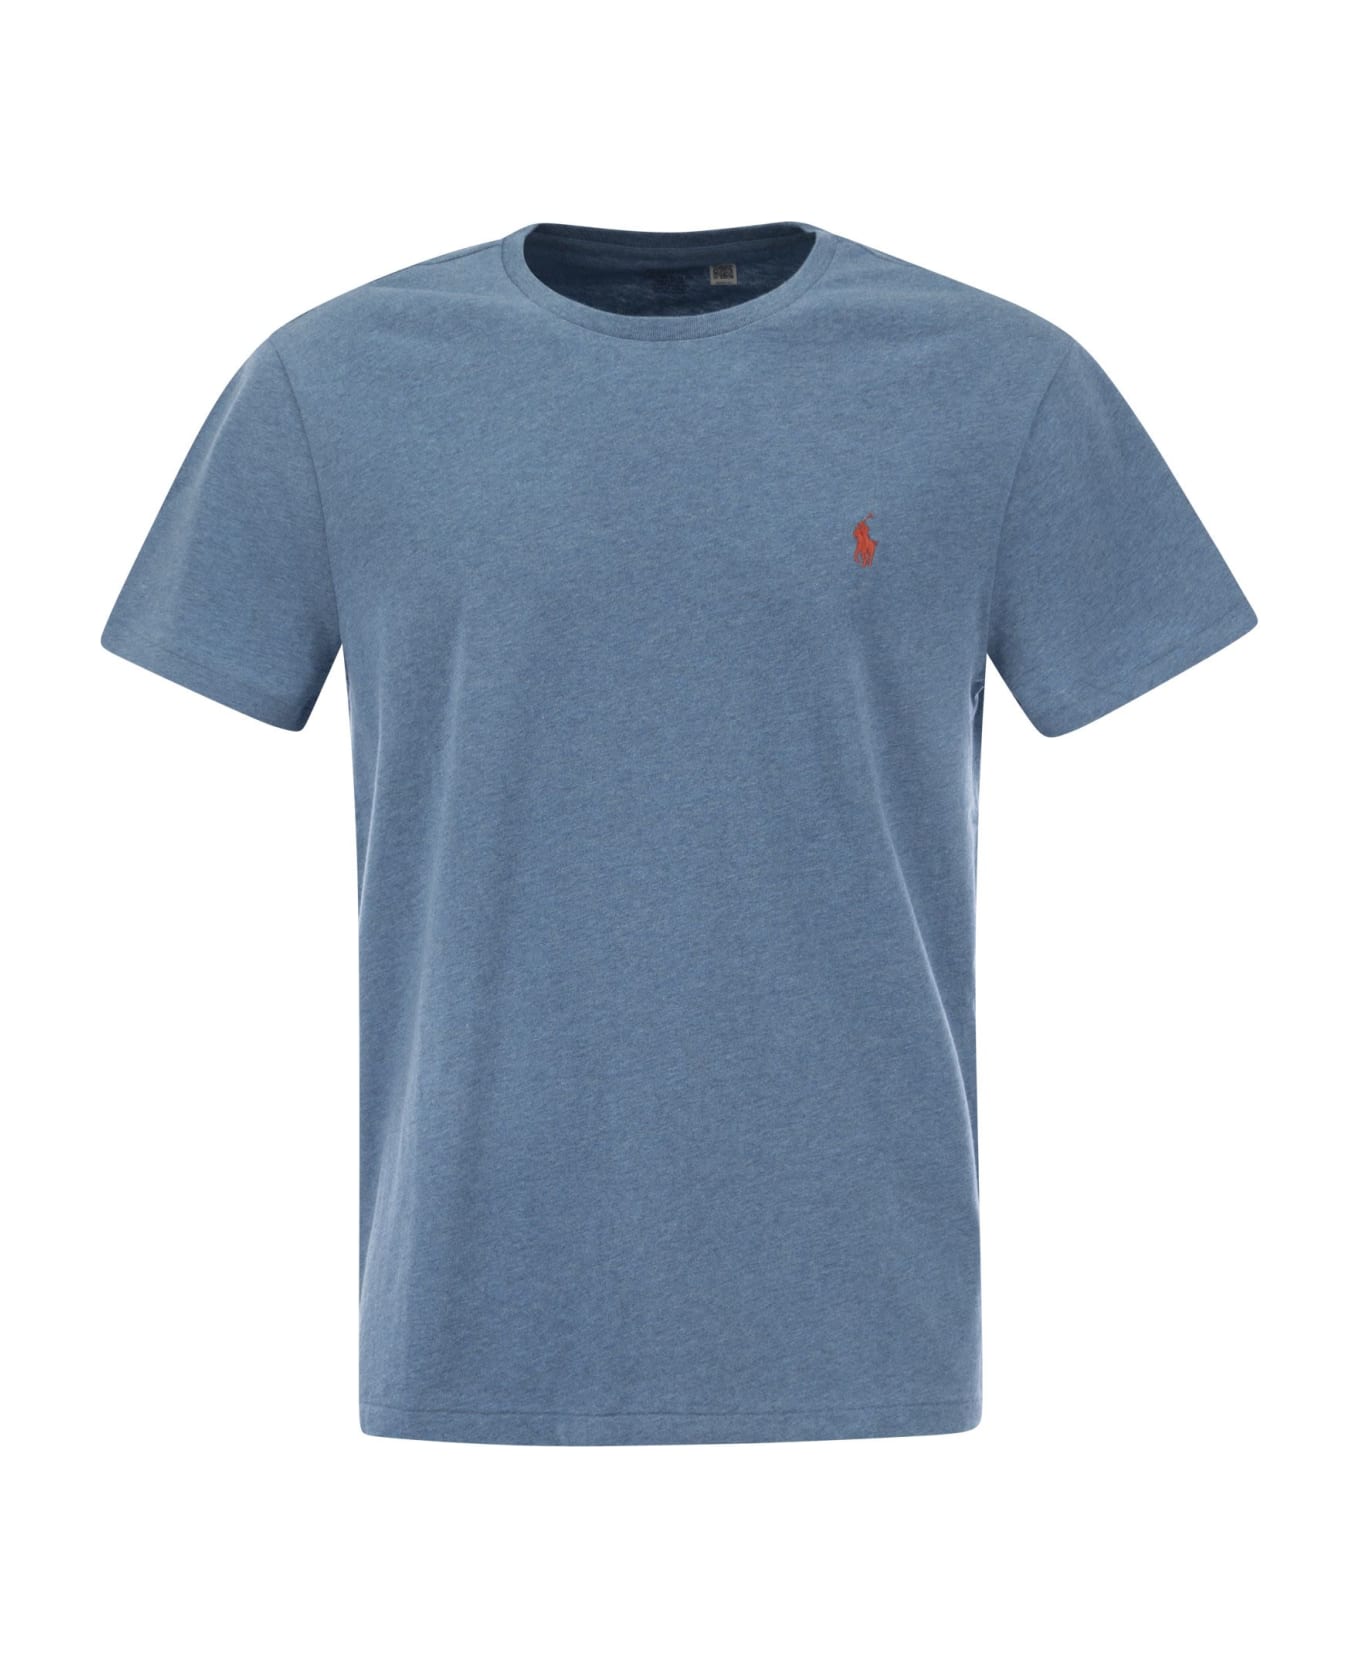 Polo Ralph Lauren Classic Marine Heather T-shirt - Blue